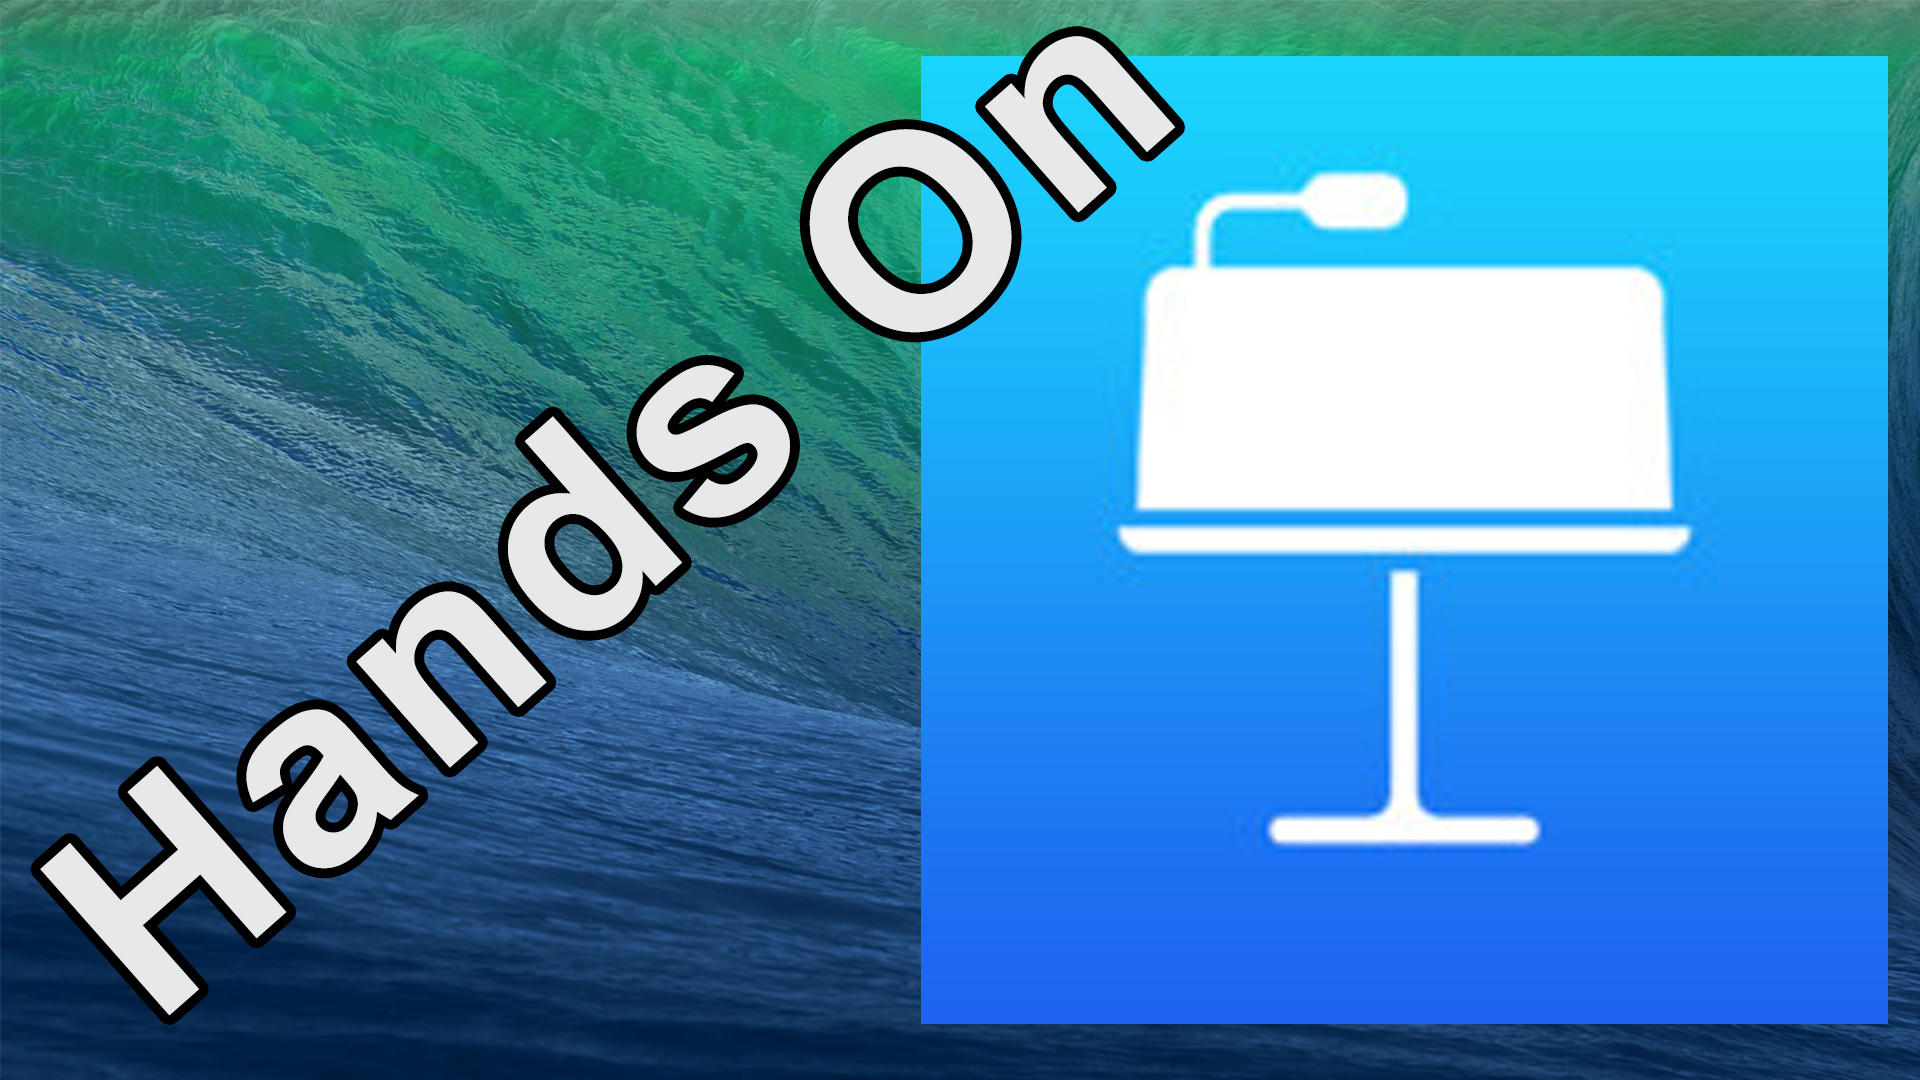 Hands On: Apple - iWork for iOS - Keynote (on iOS 7)